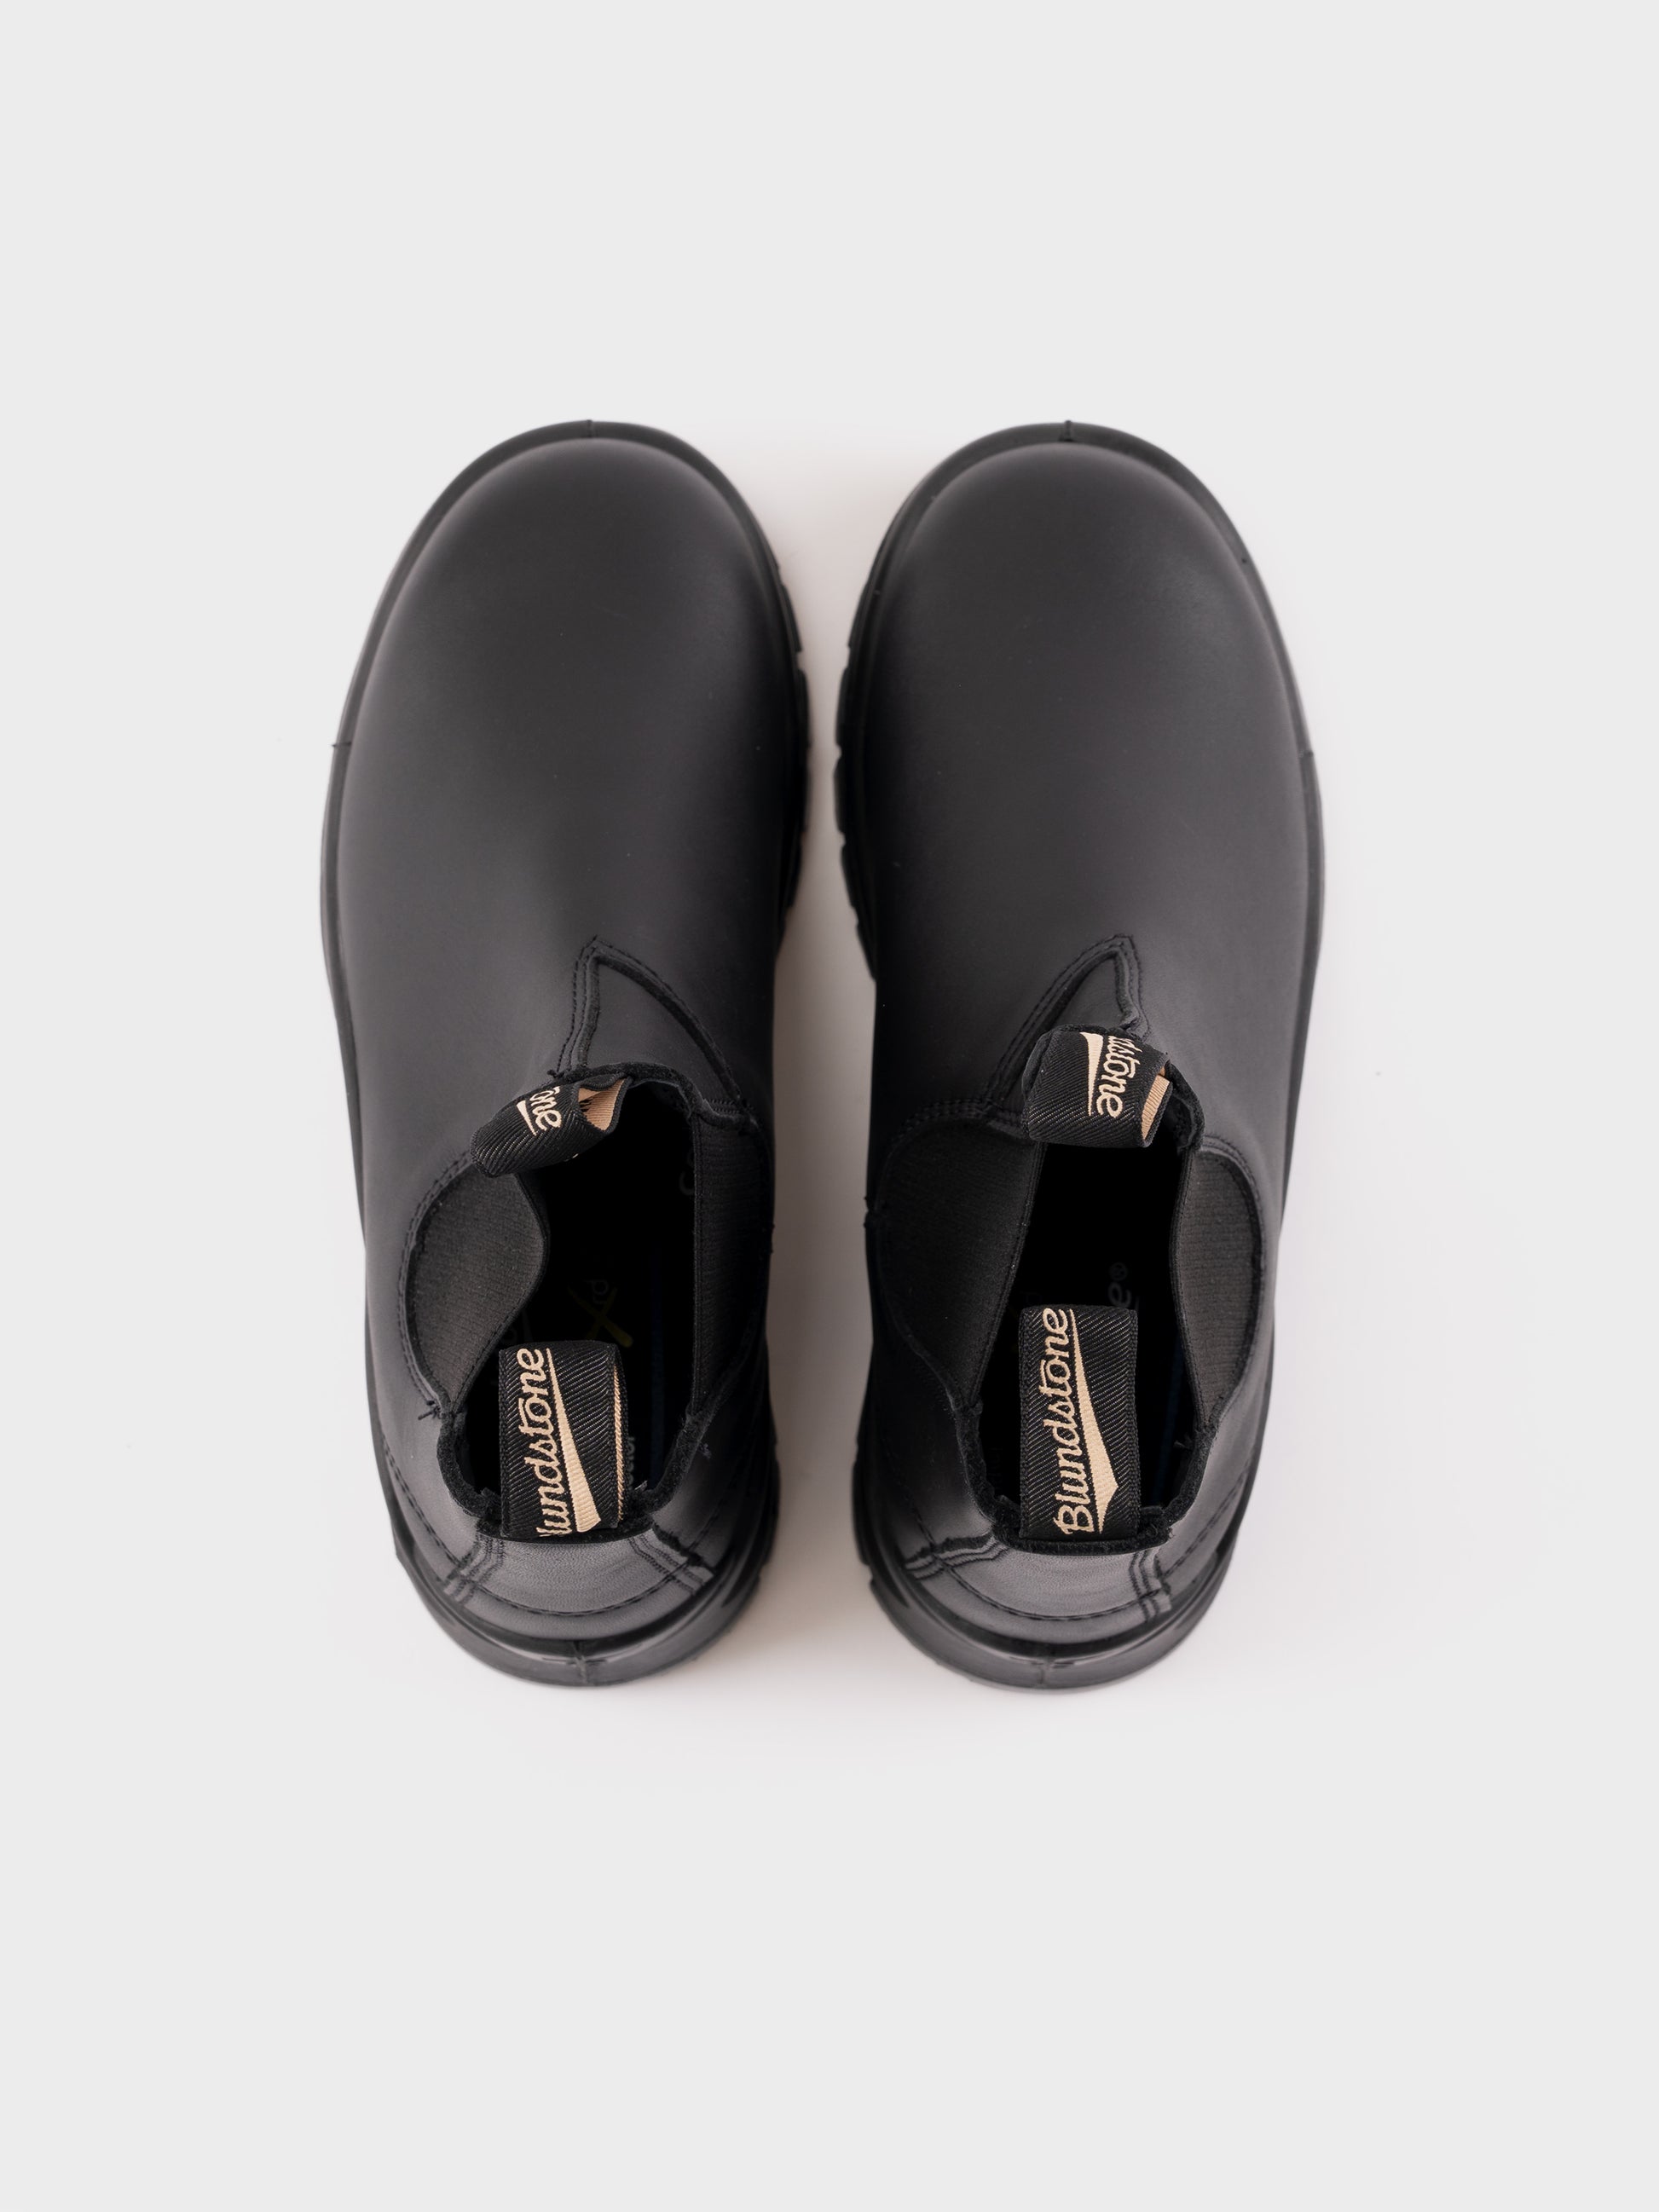 Blundstone Lug Boots - 2240 - Black Leather